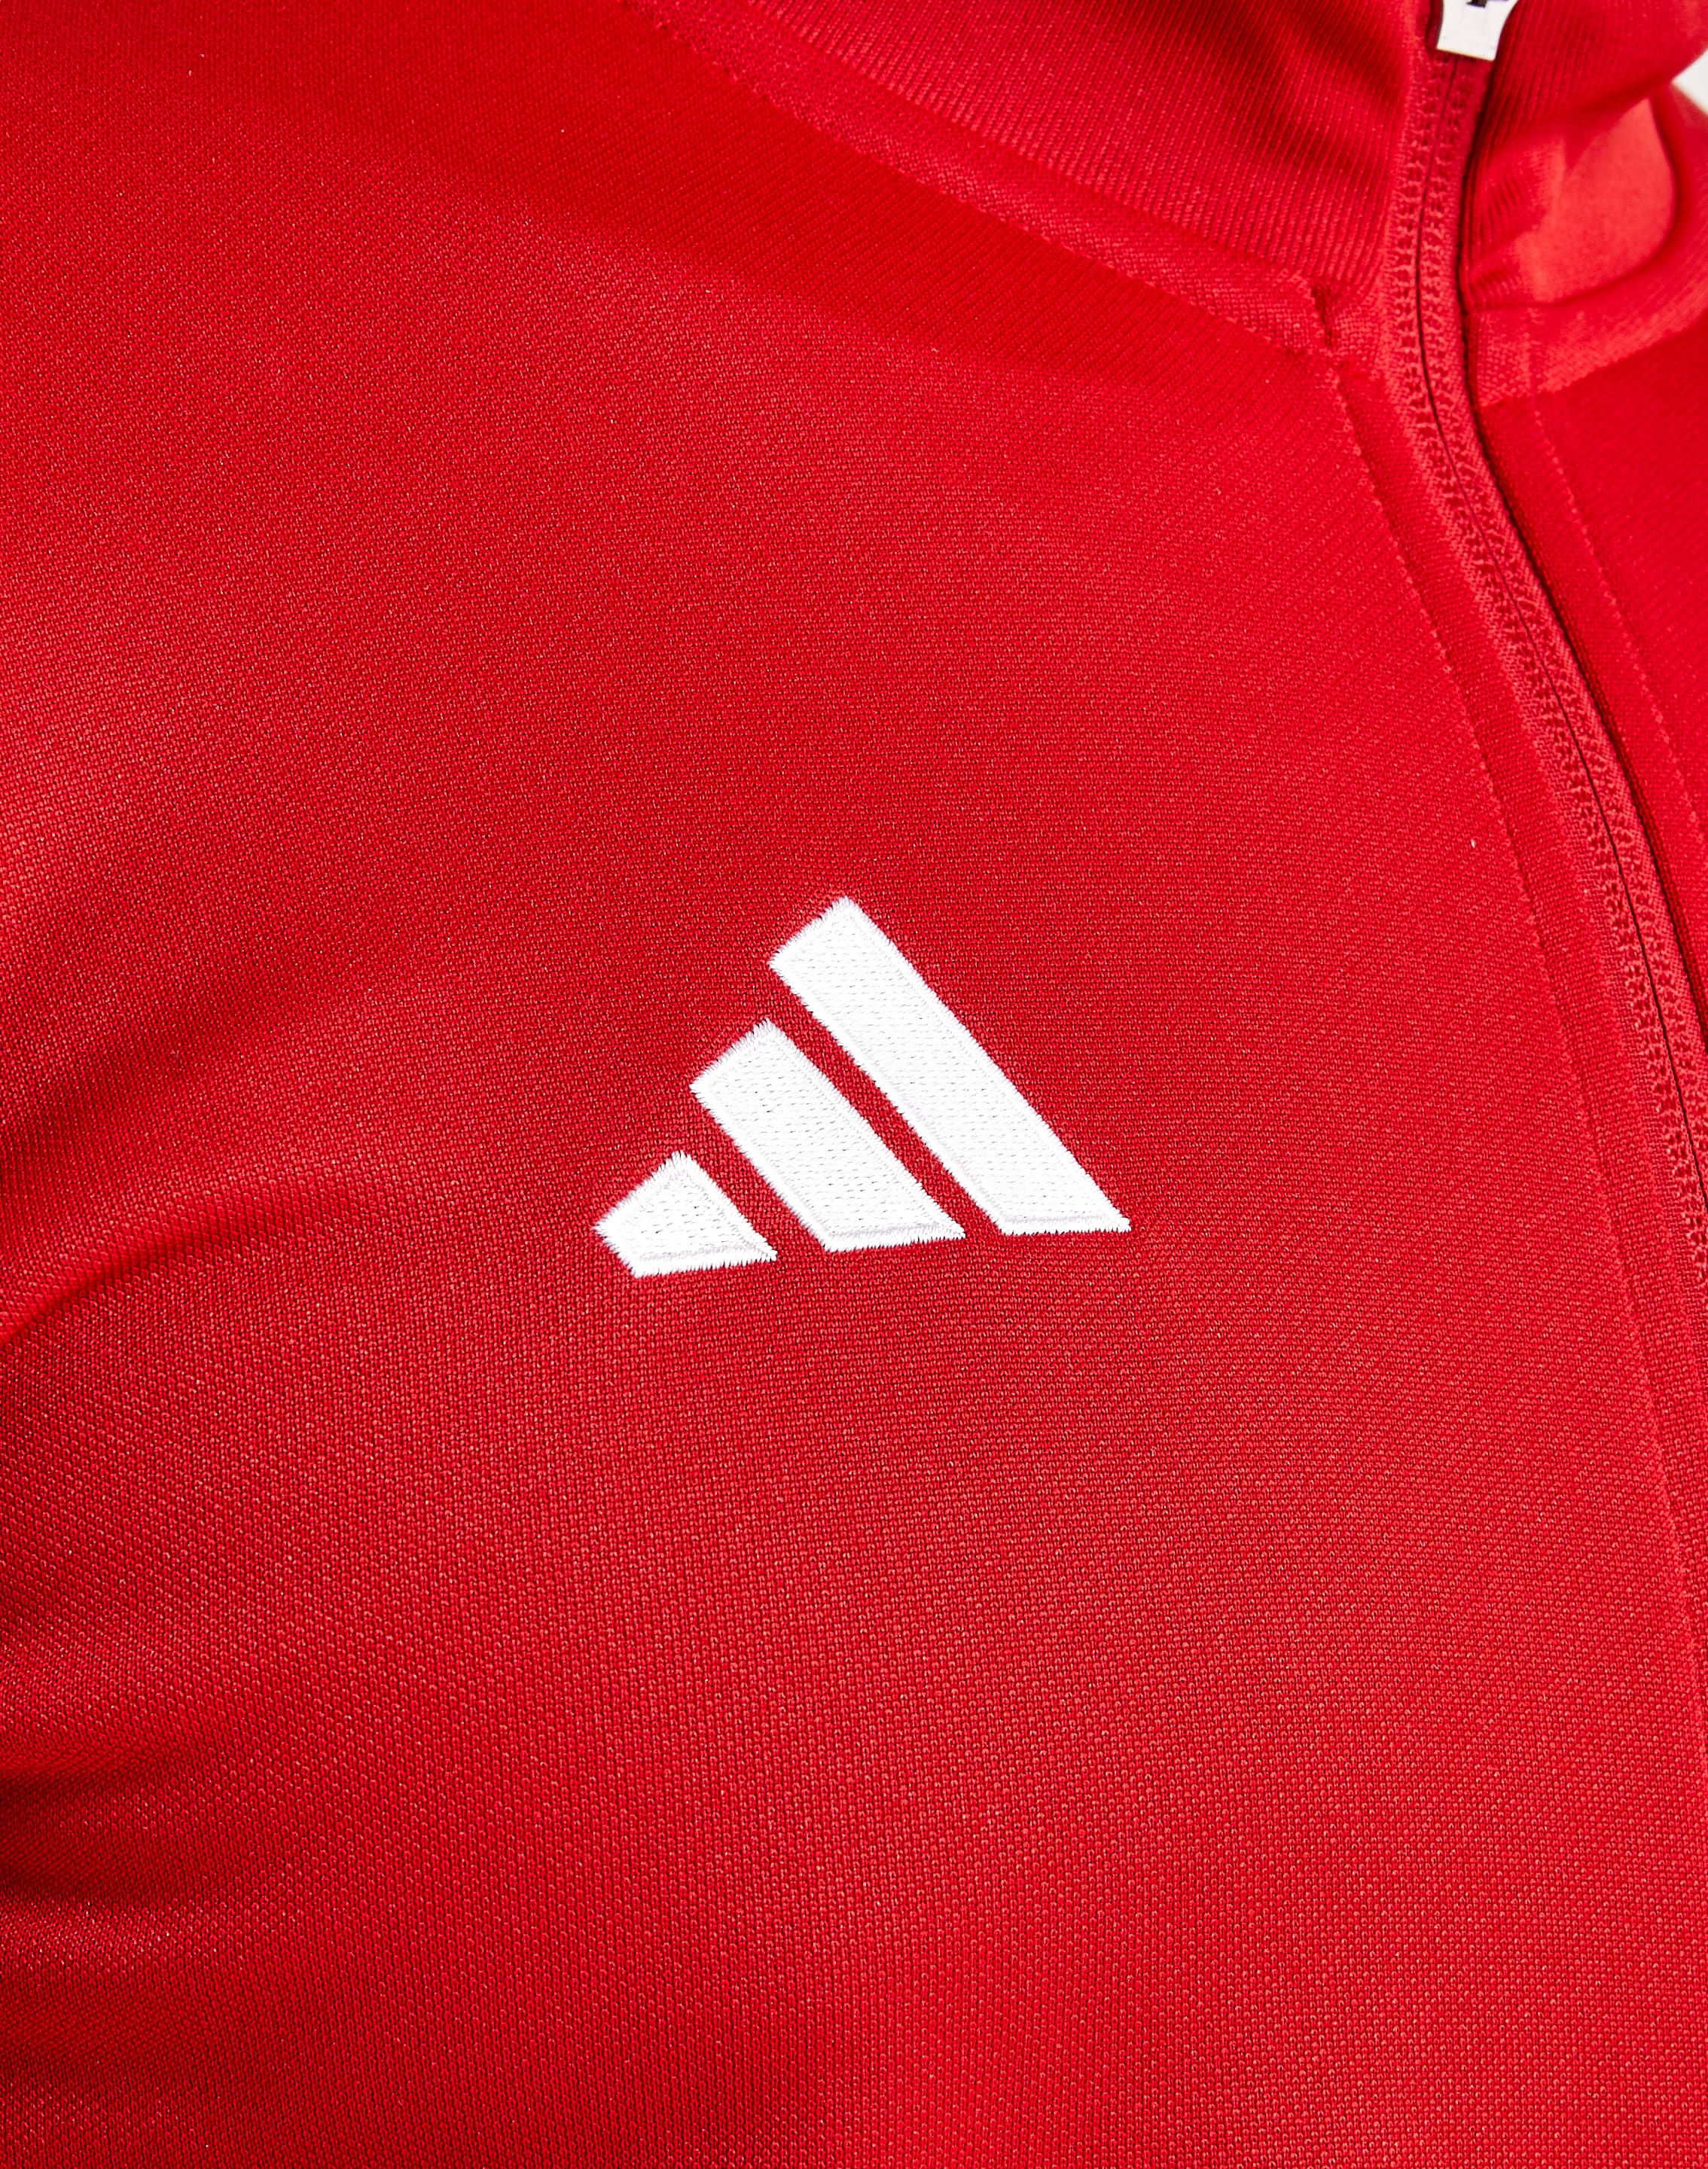 Adidas Tiro 23 League Training Jacket – DTLR